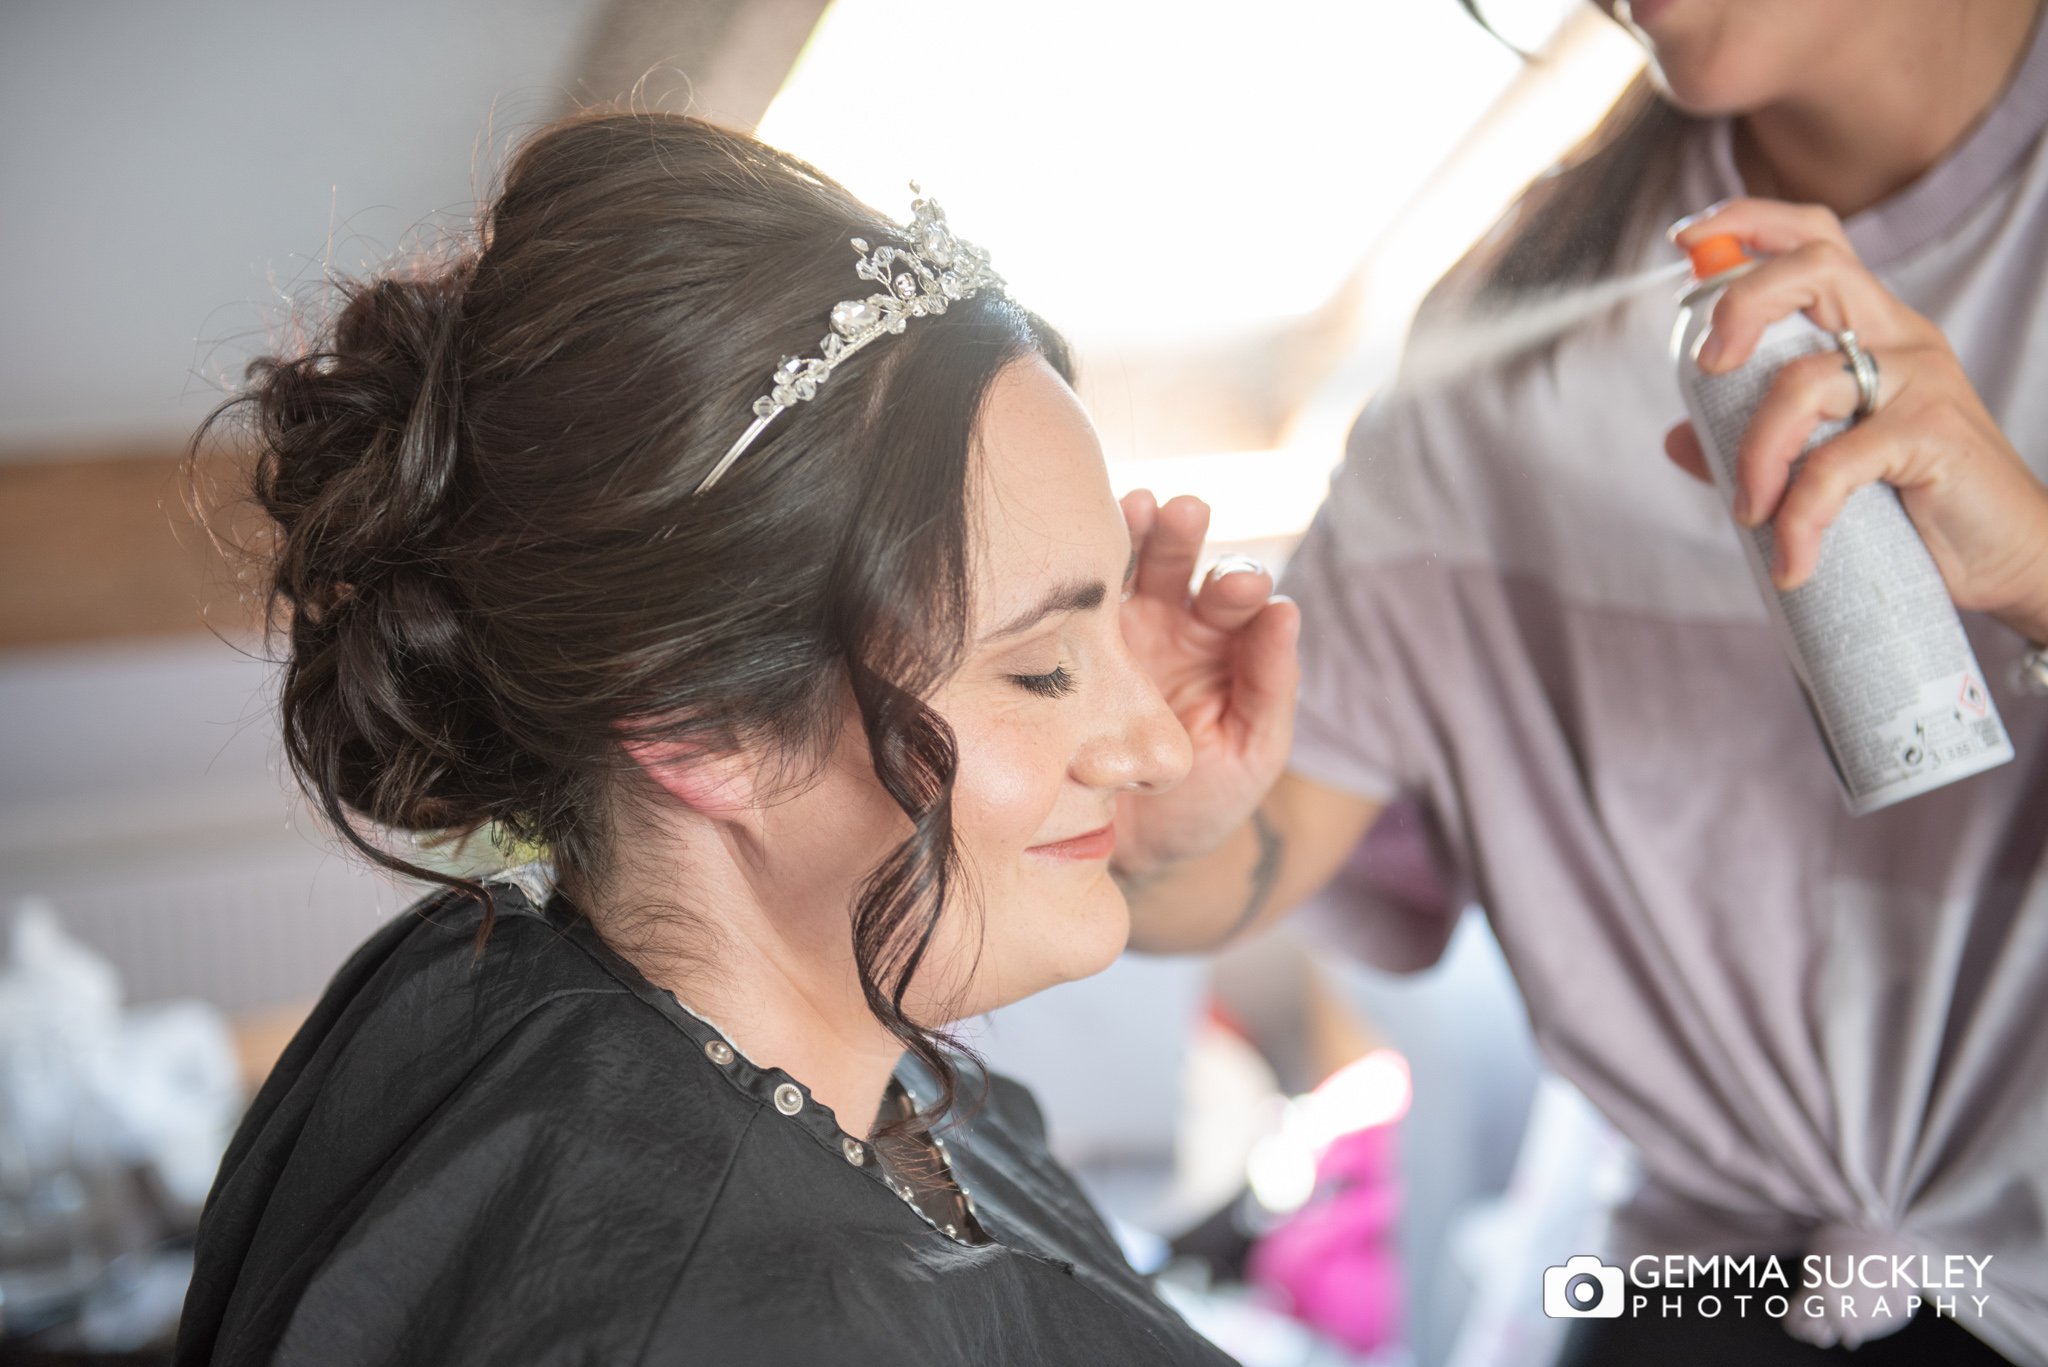 hairspray being sprayed on the brides hair